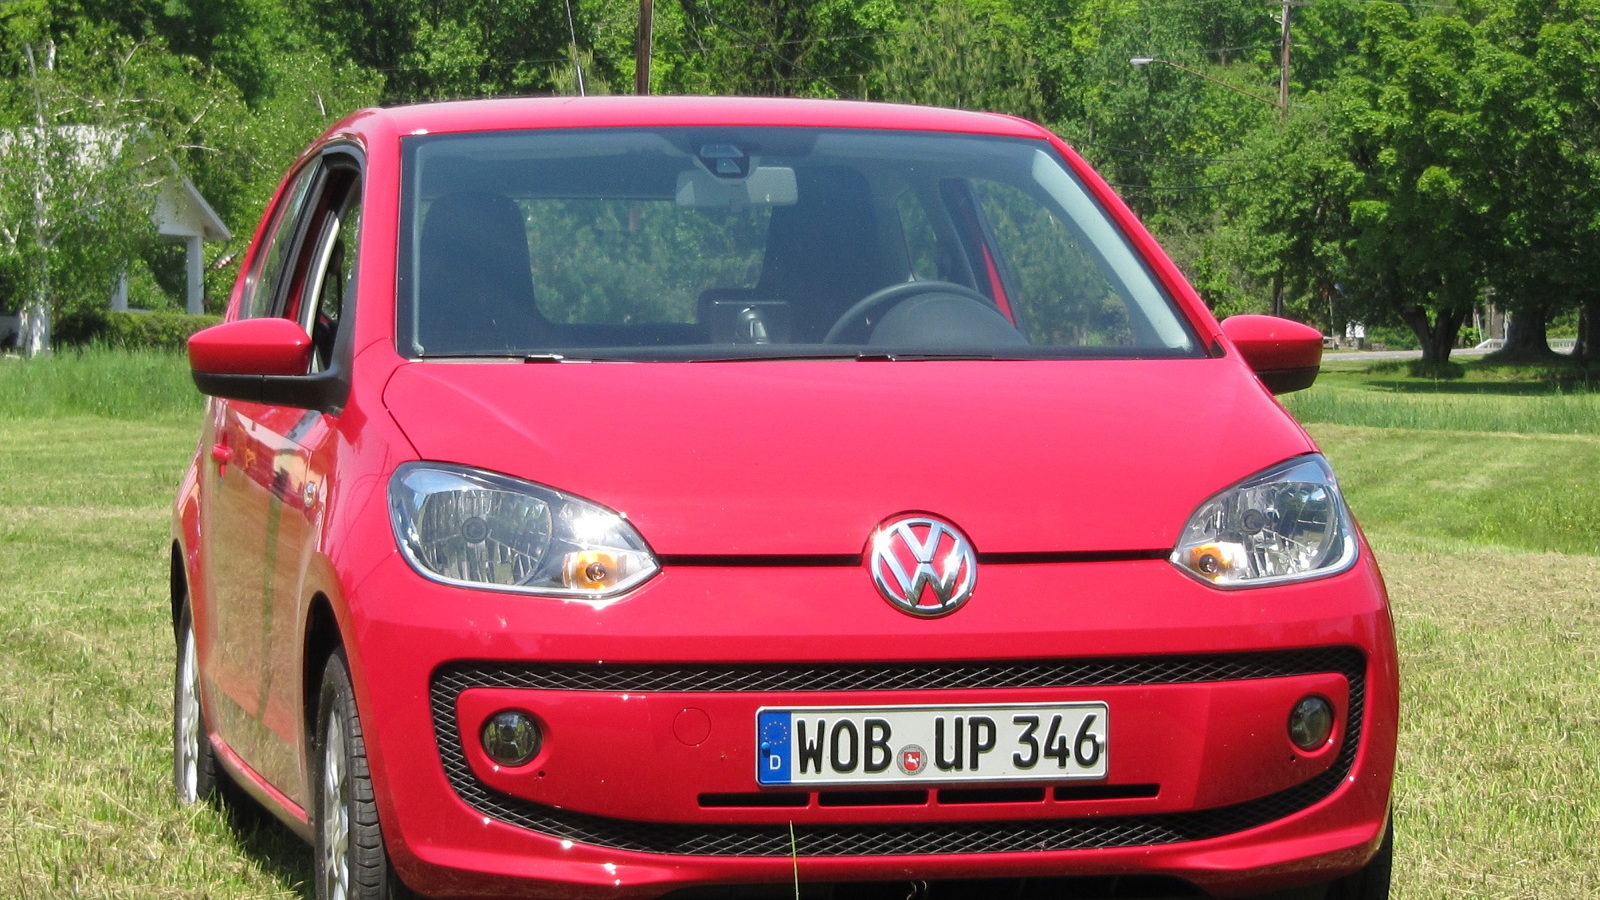 2012 Volkswagen Up minicar (German model), road test, Catskill Mountains, NY, May 2012